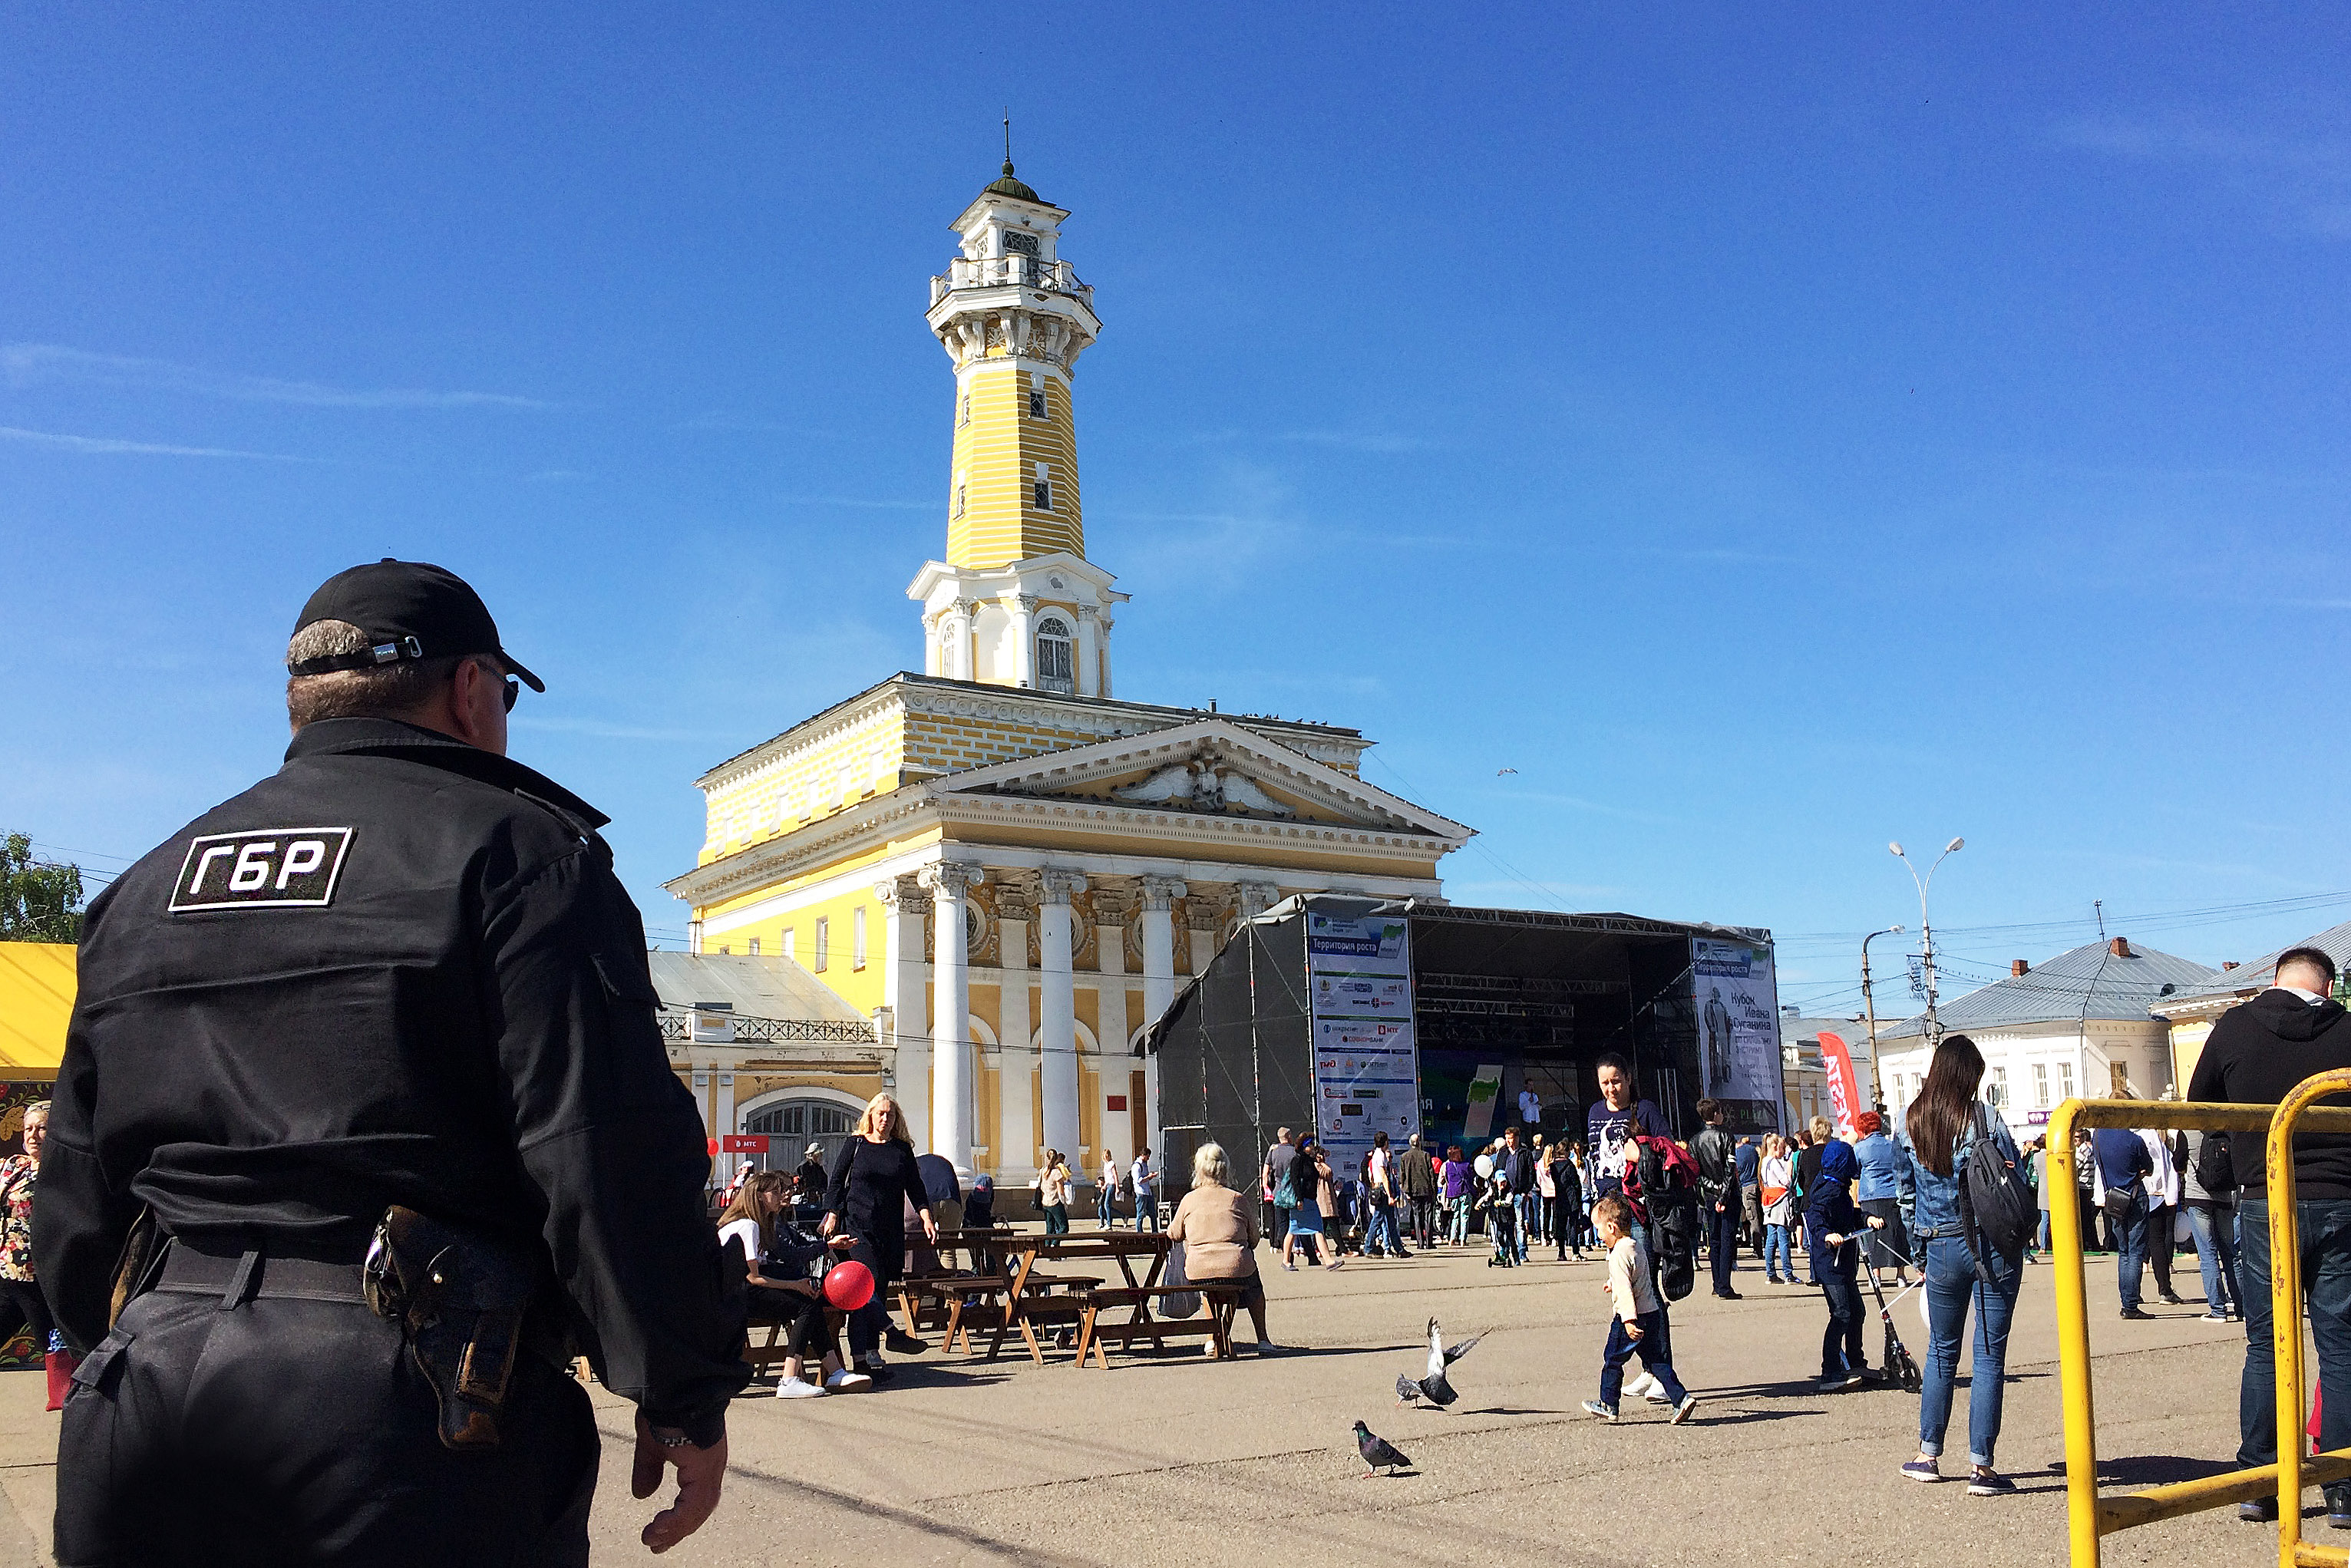 ГБР Патруль Безопасности охрана концерта мероприятия Кострома